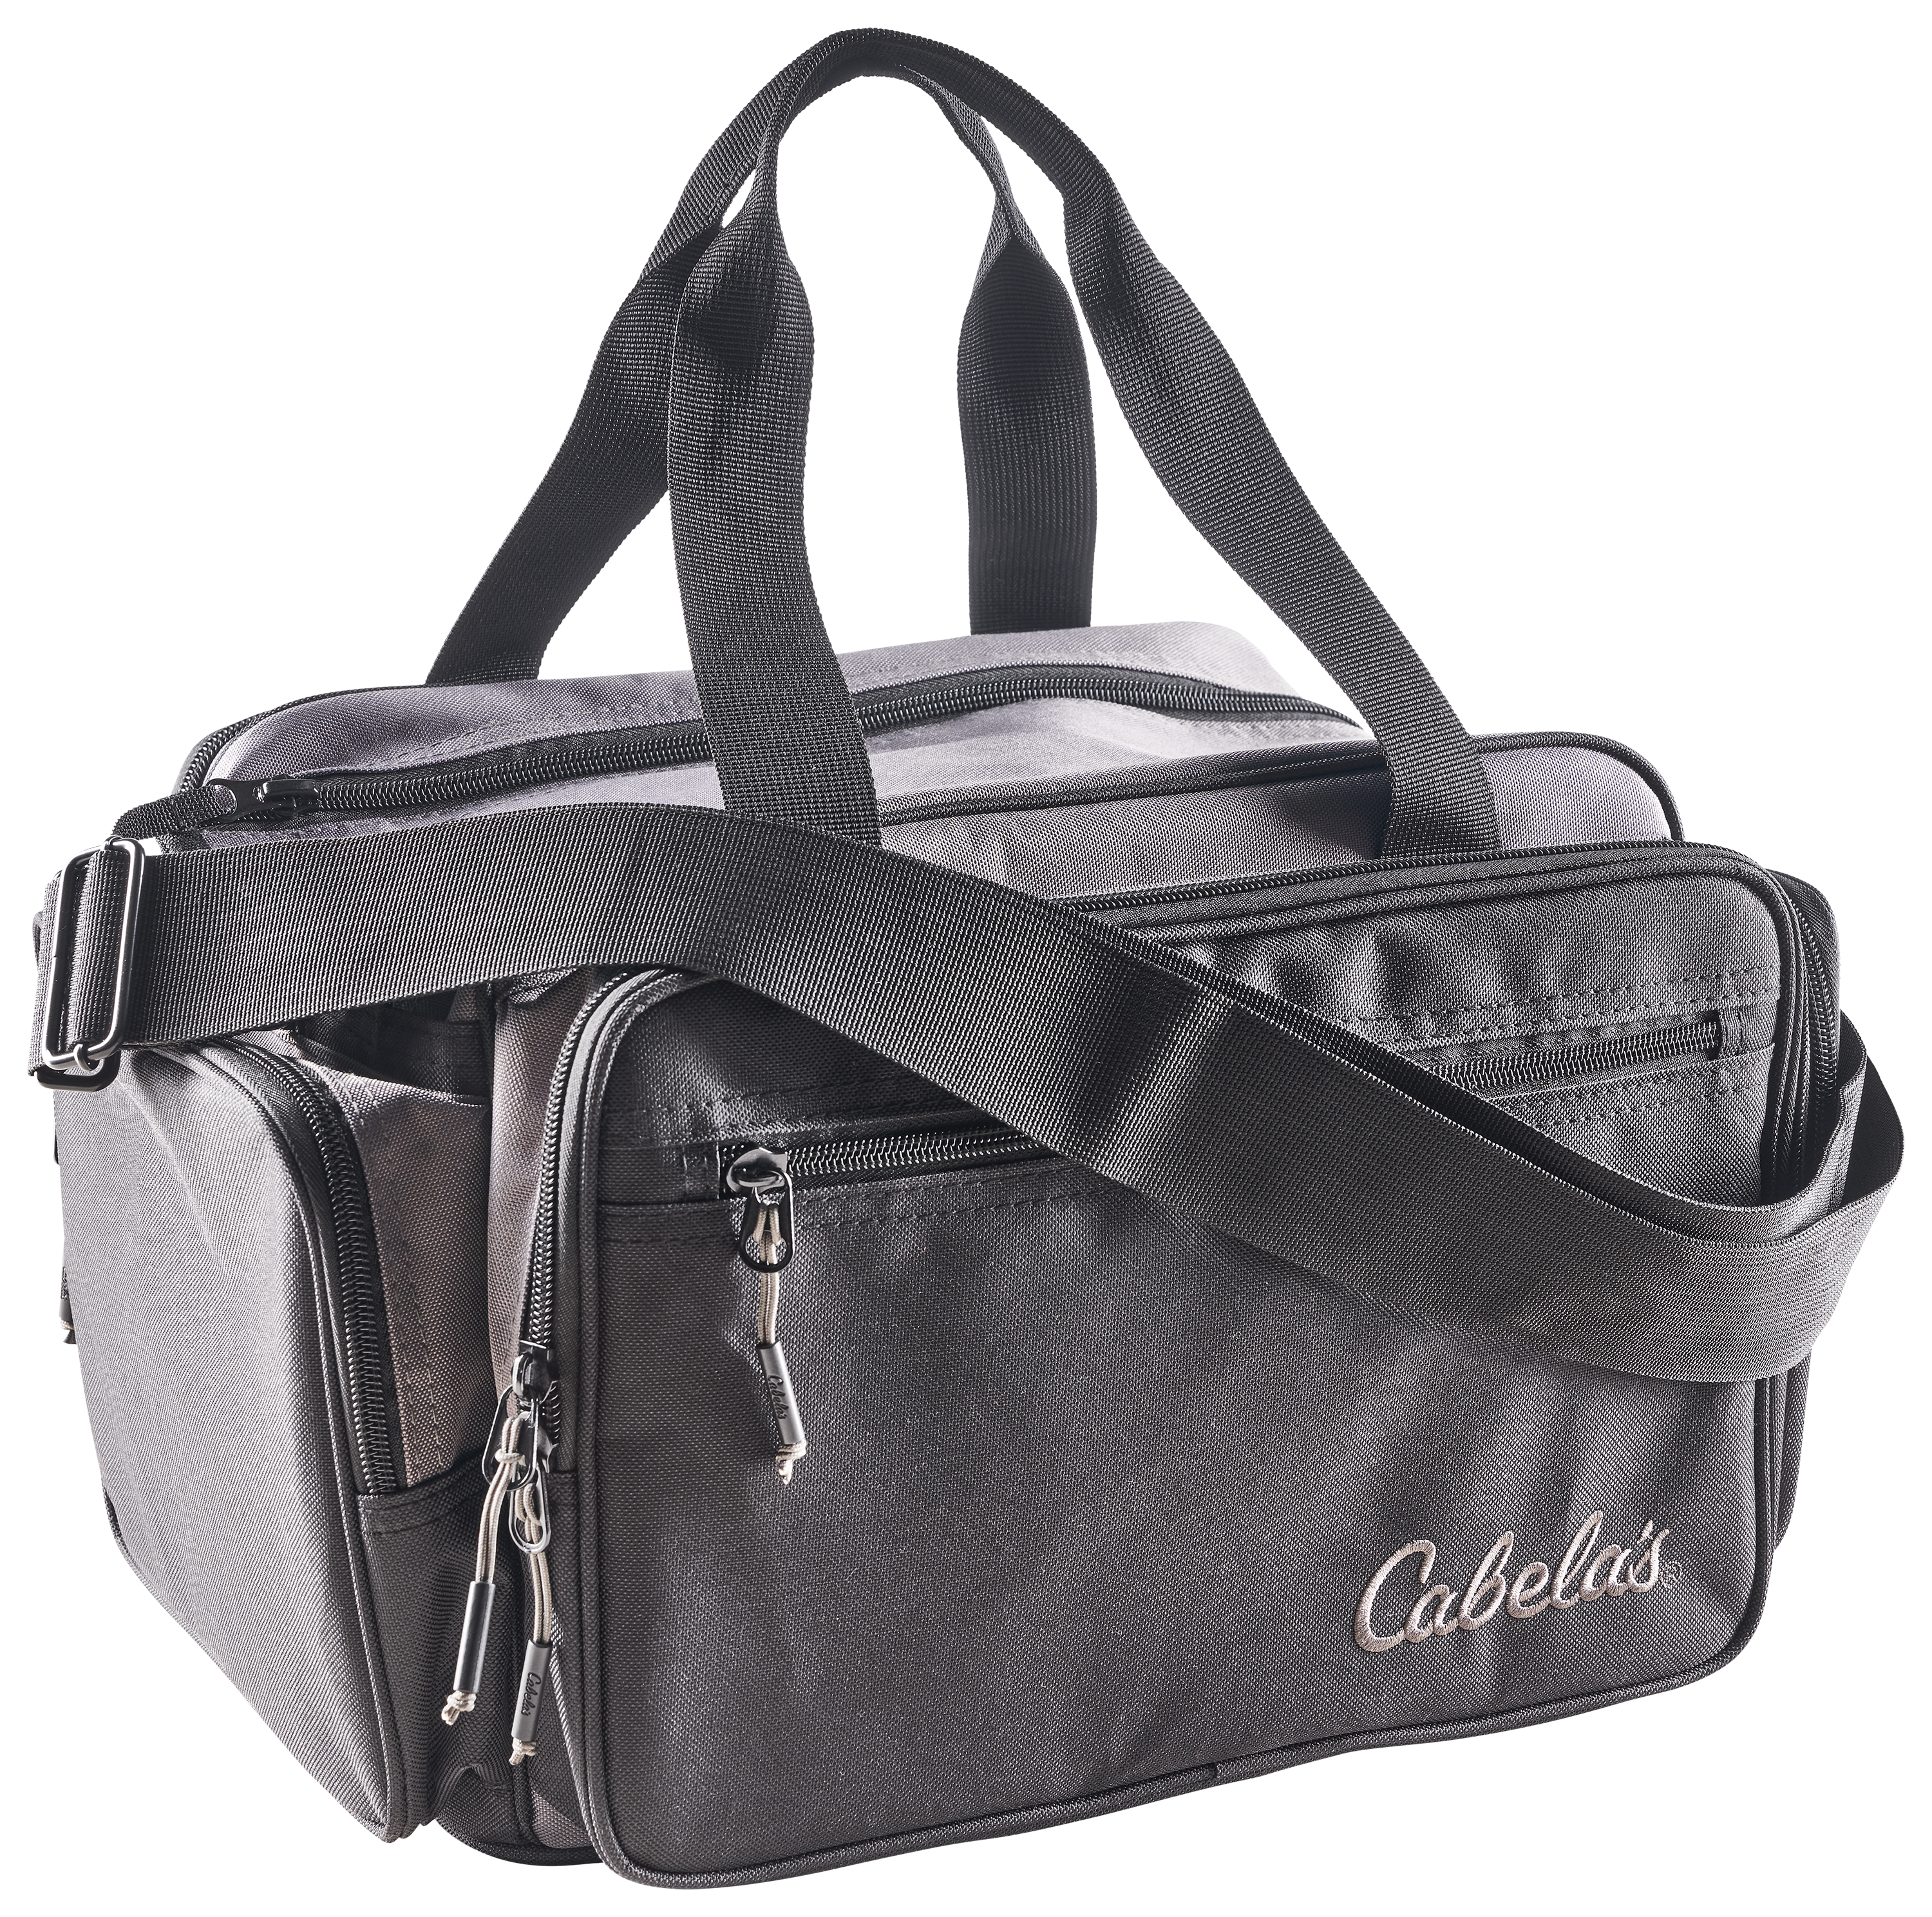 Cabela's 1000 Range Bag - Gray/Black